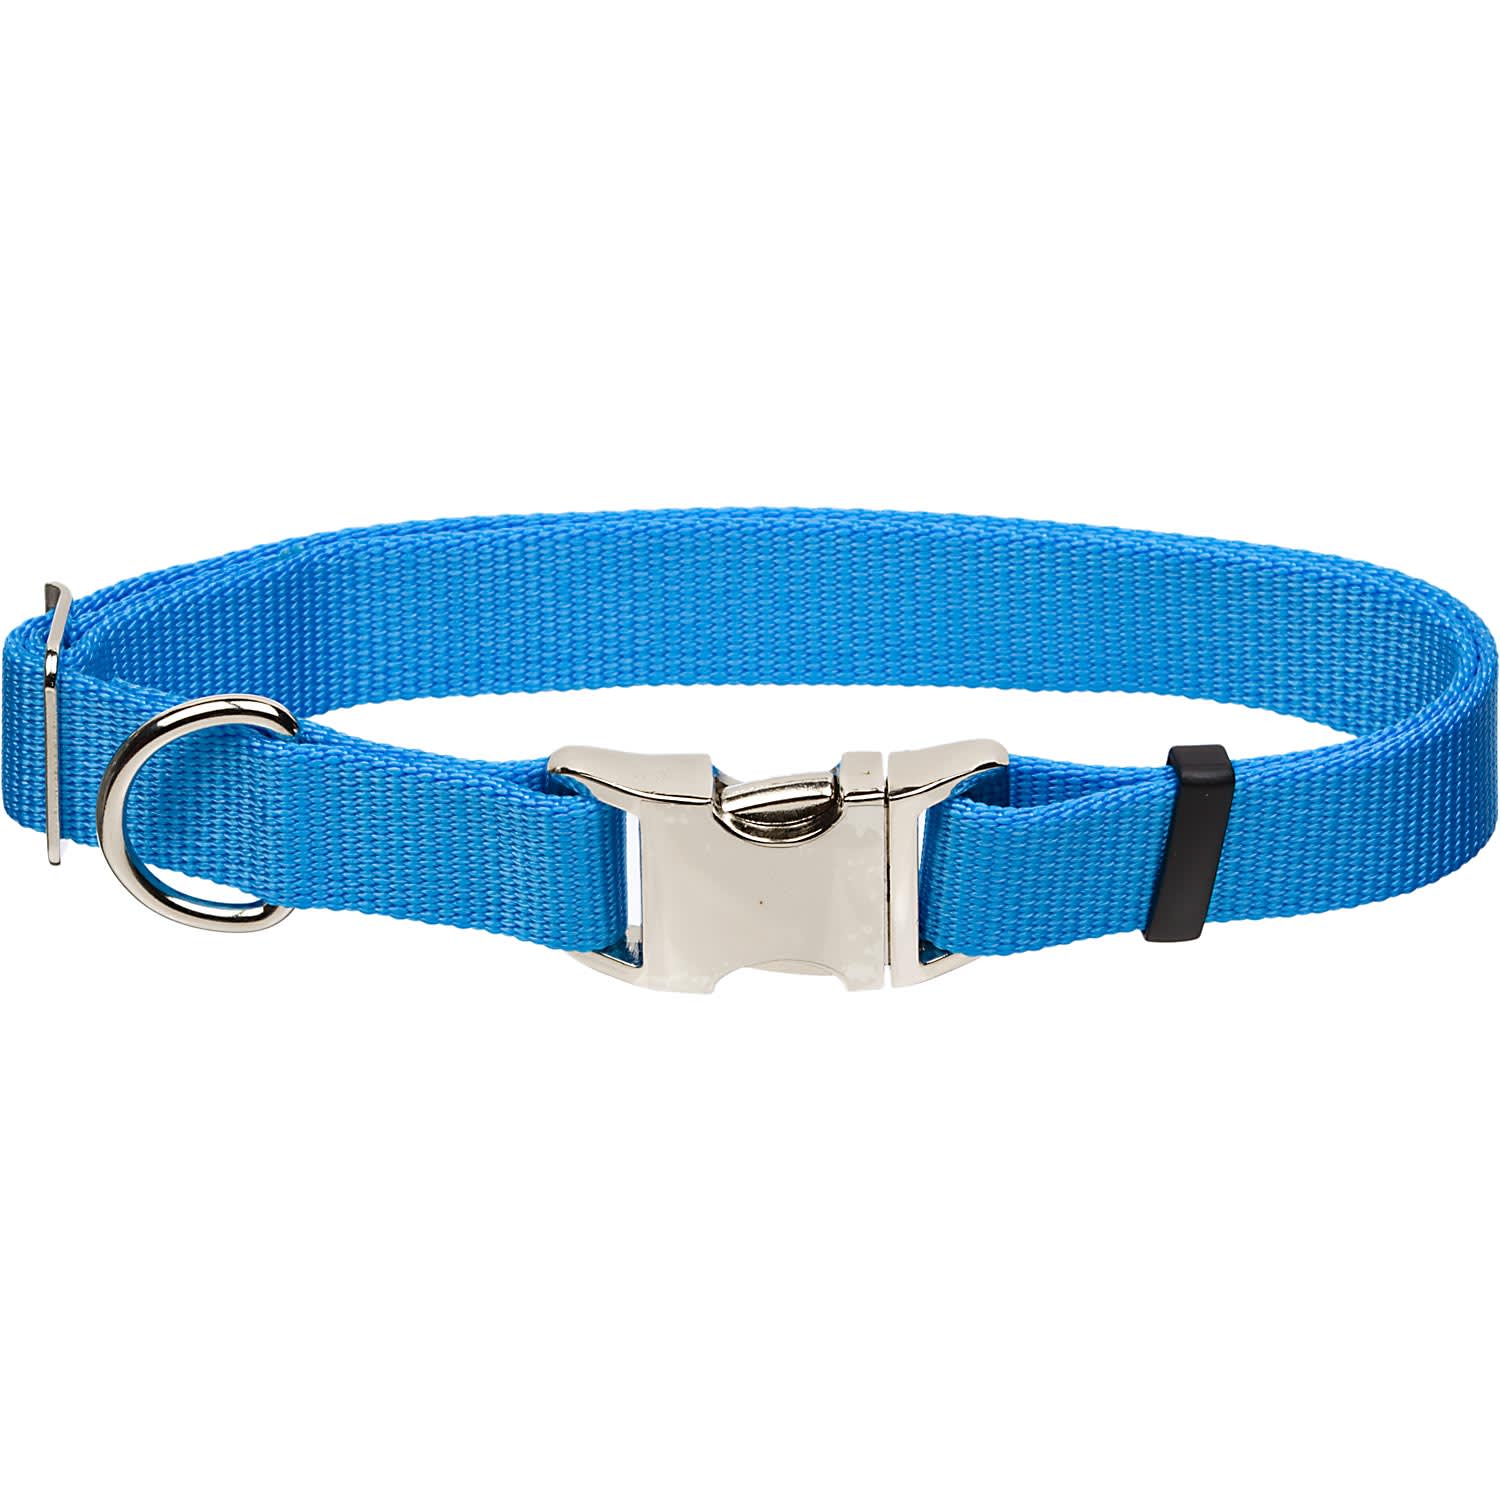 Coastal Pet Metal Buckle Nylon Adjustable Personalized Dog Collar in Light Blue, 5/8 Width